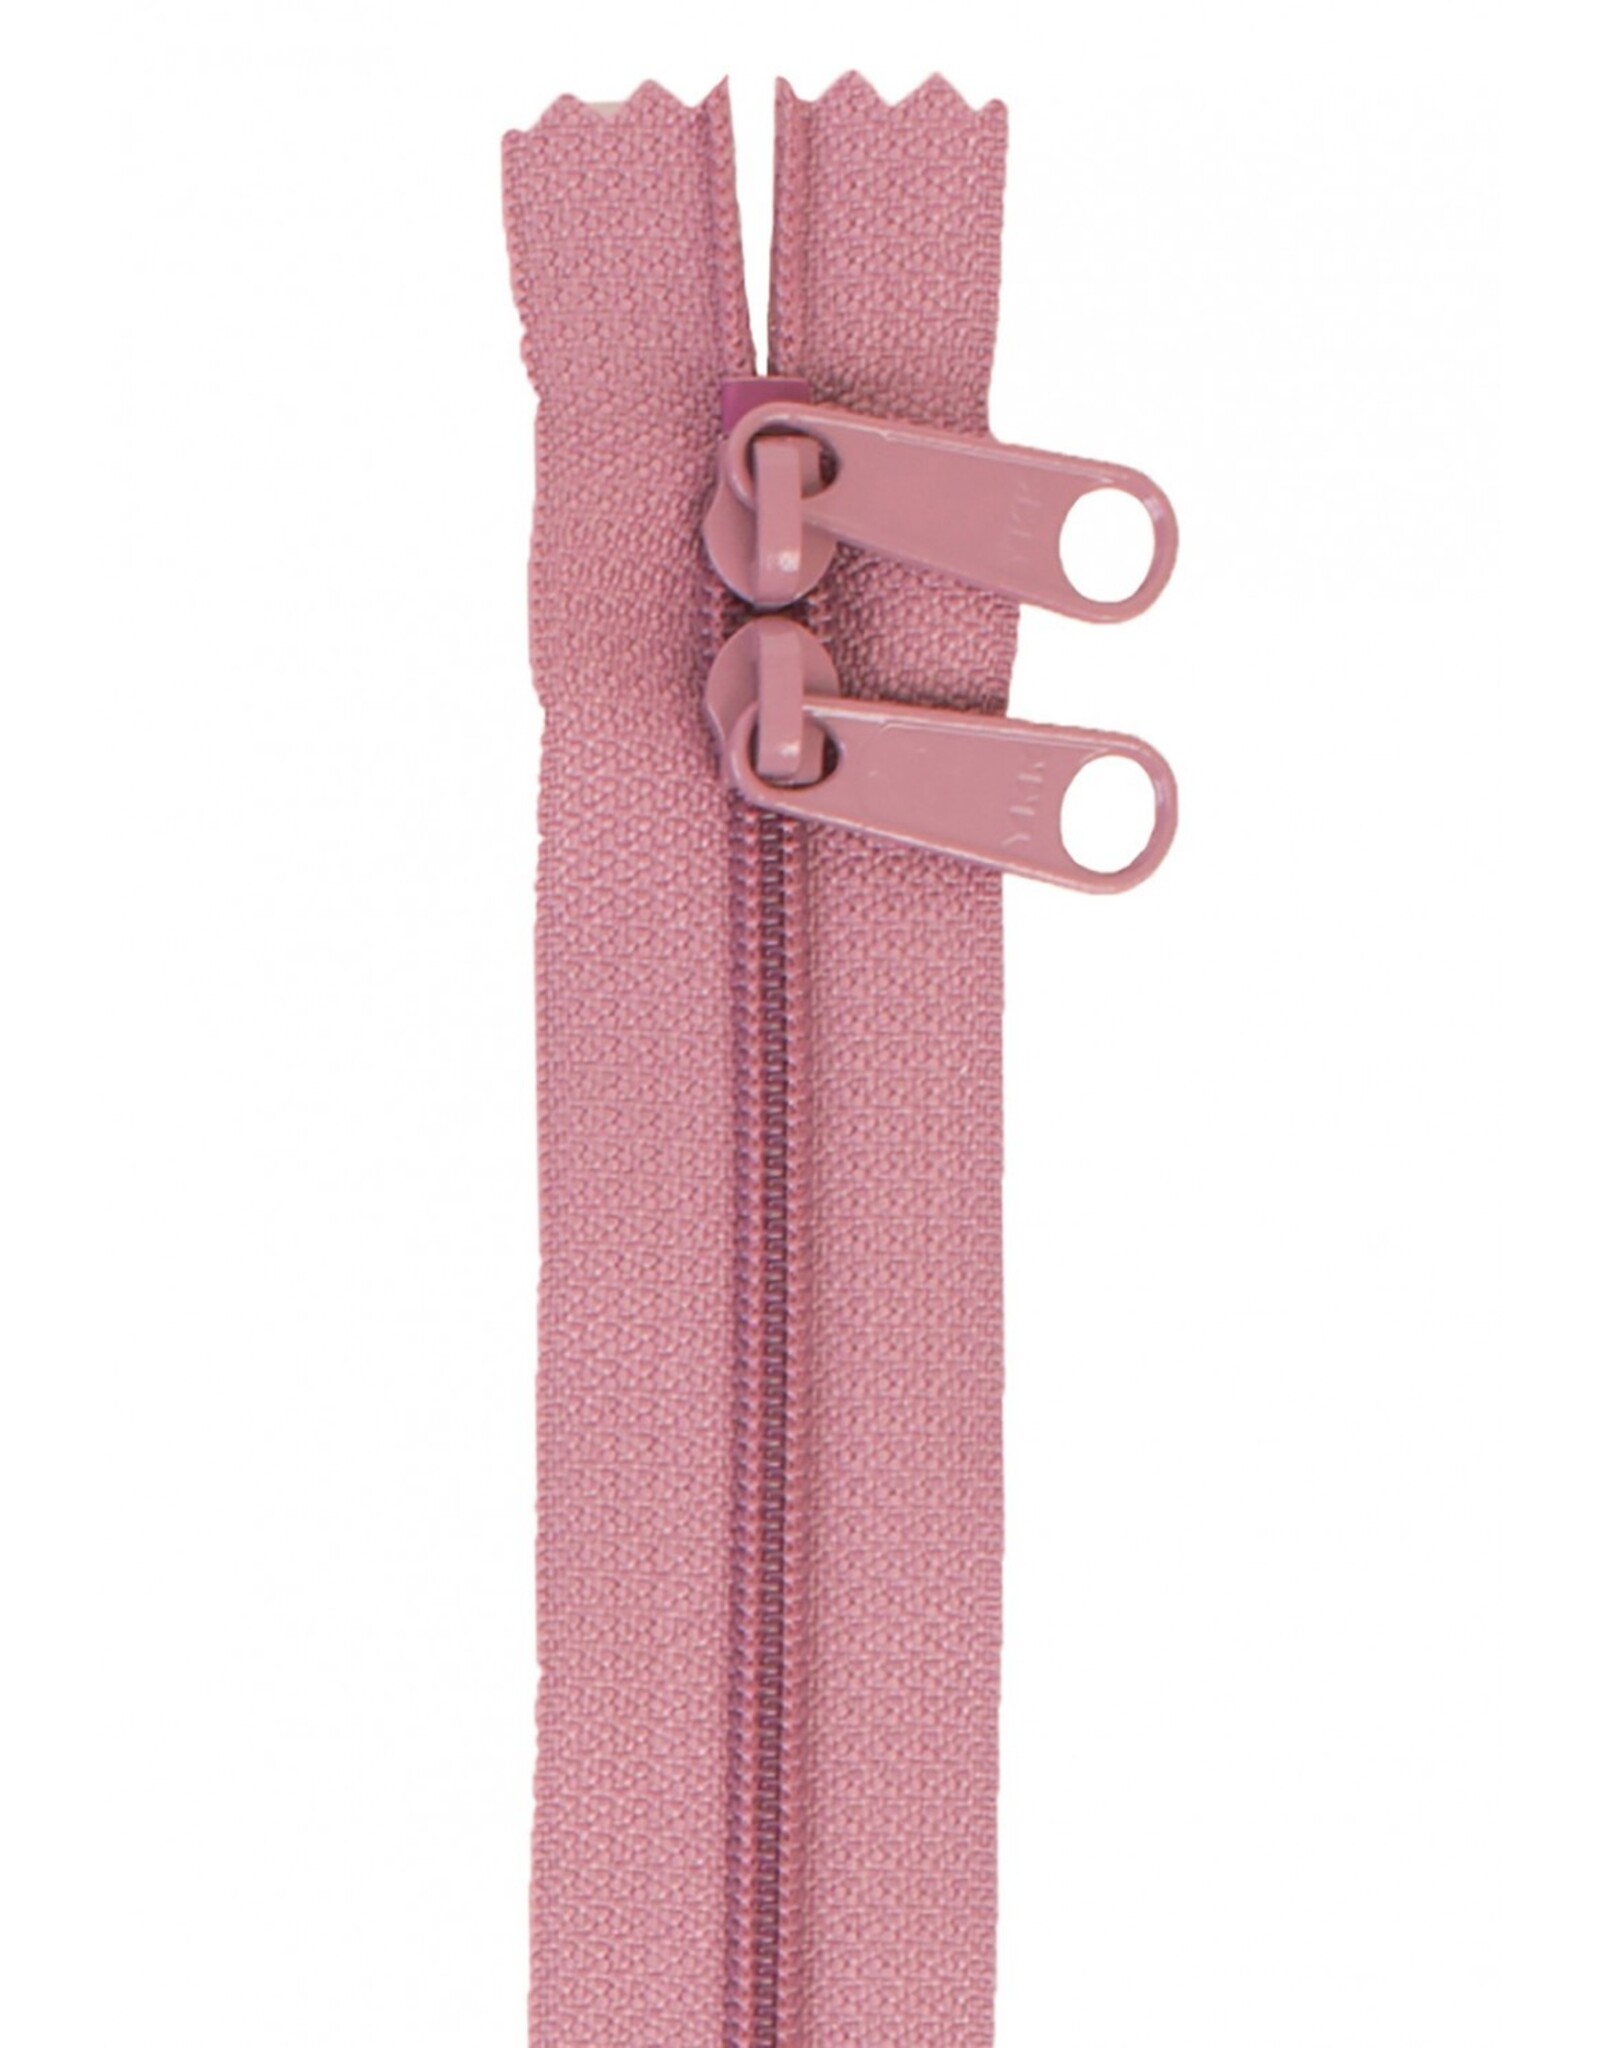 ByAnnie Handbag Zipper - 30 inch / 76 cm - double slide - Dusty Rose